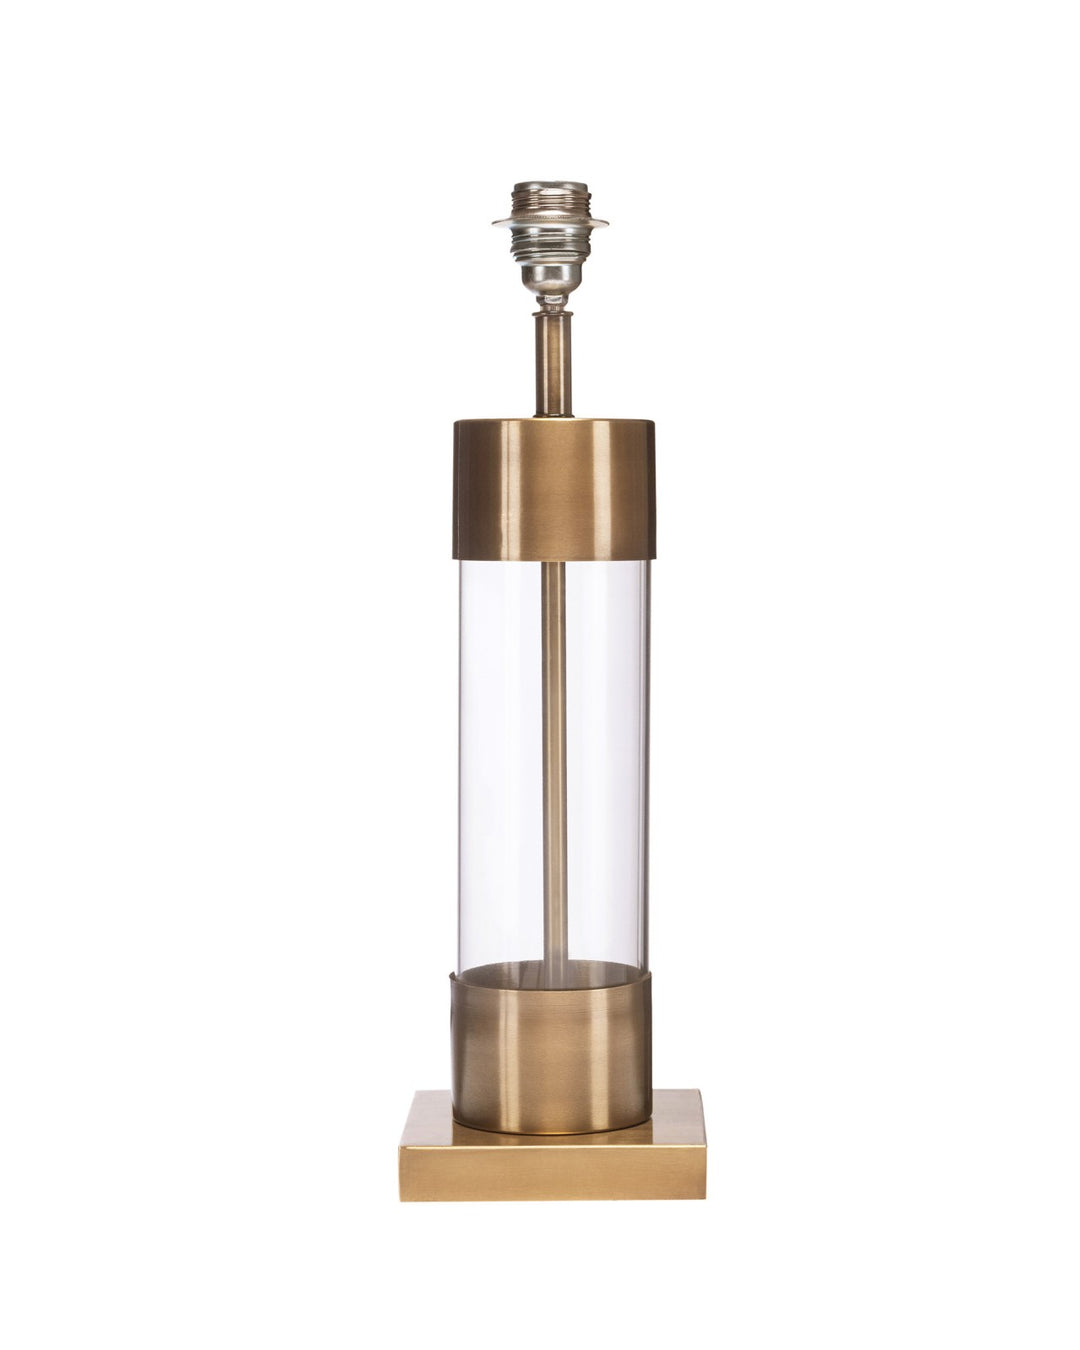 mind-the-gap-sibella-lamp-retro-acrylic-brass-lamp-base-lighting-artdeco-antique-finish-pillar-style-light-table